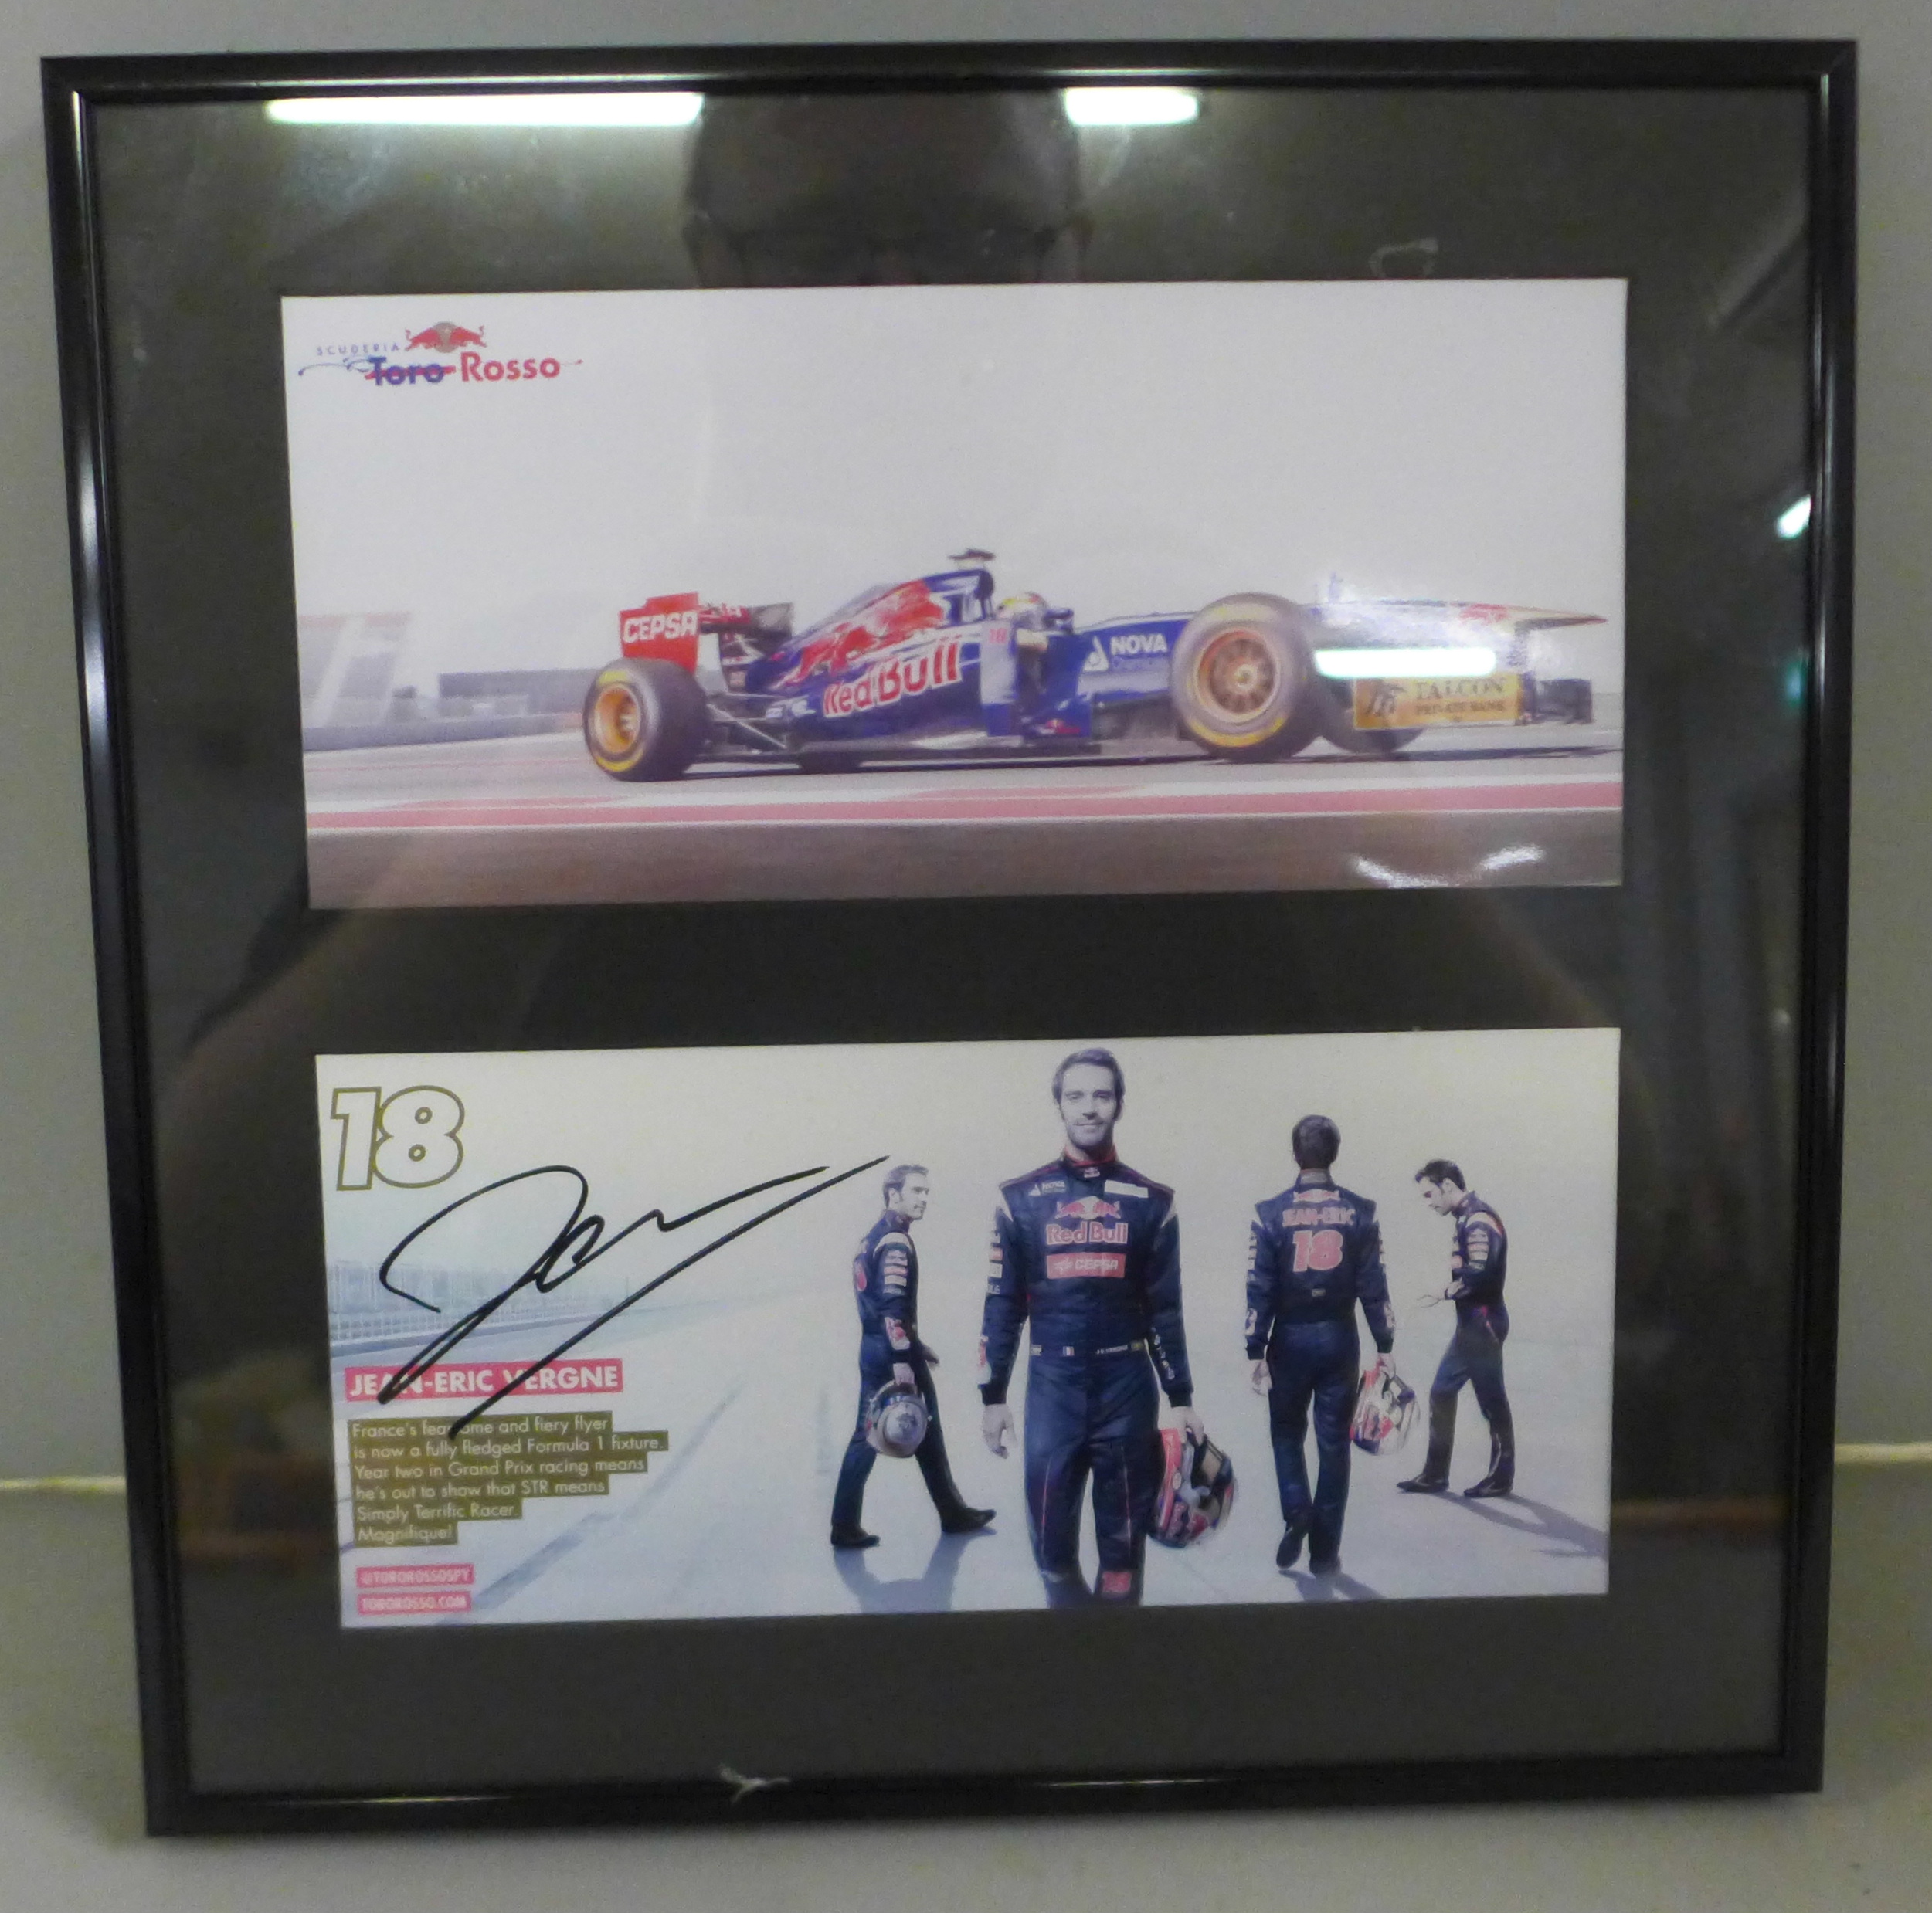 Three motor racing autograph displays, Jean-Eric Vergne, Mark Webber and Kimi Räikkönen, each with - Bild 4 aus 9